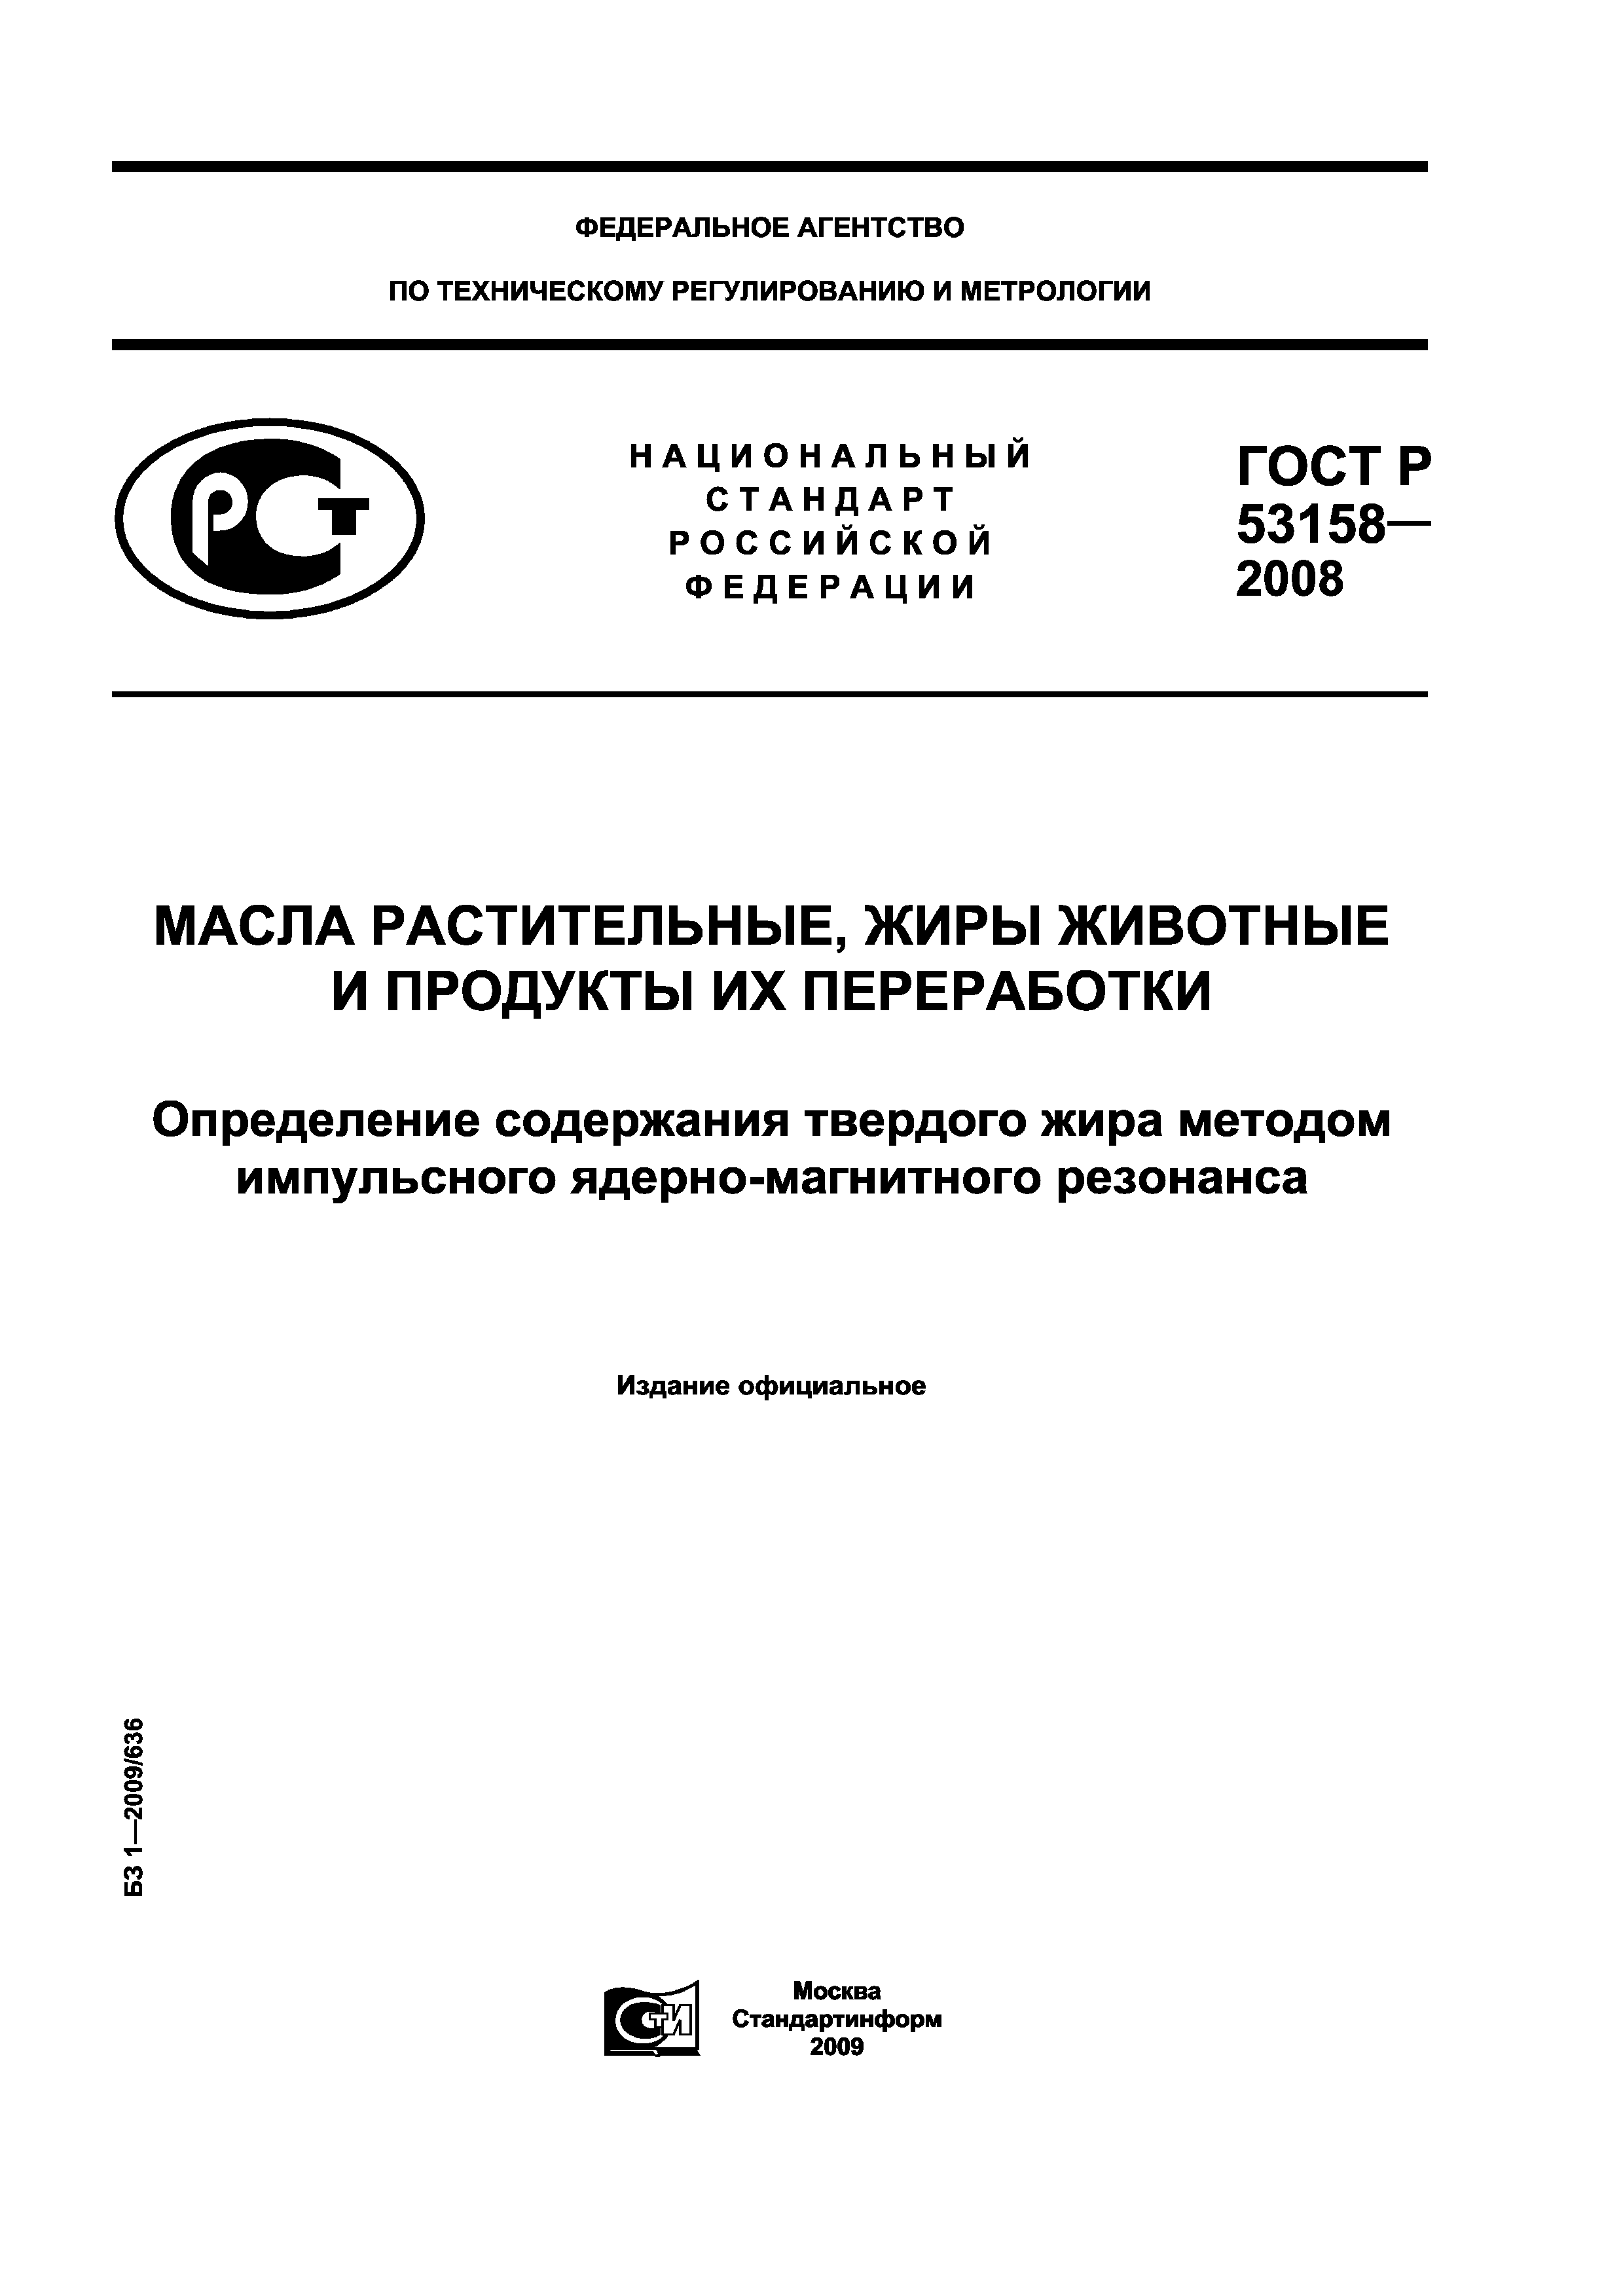 ГОСТ Р 53158-2008